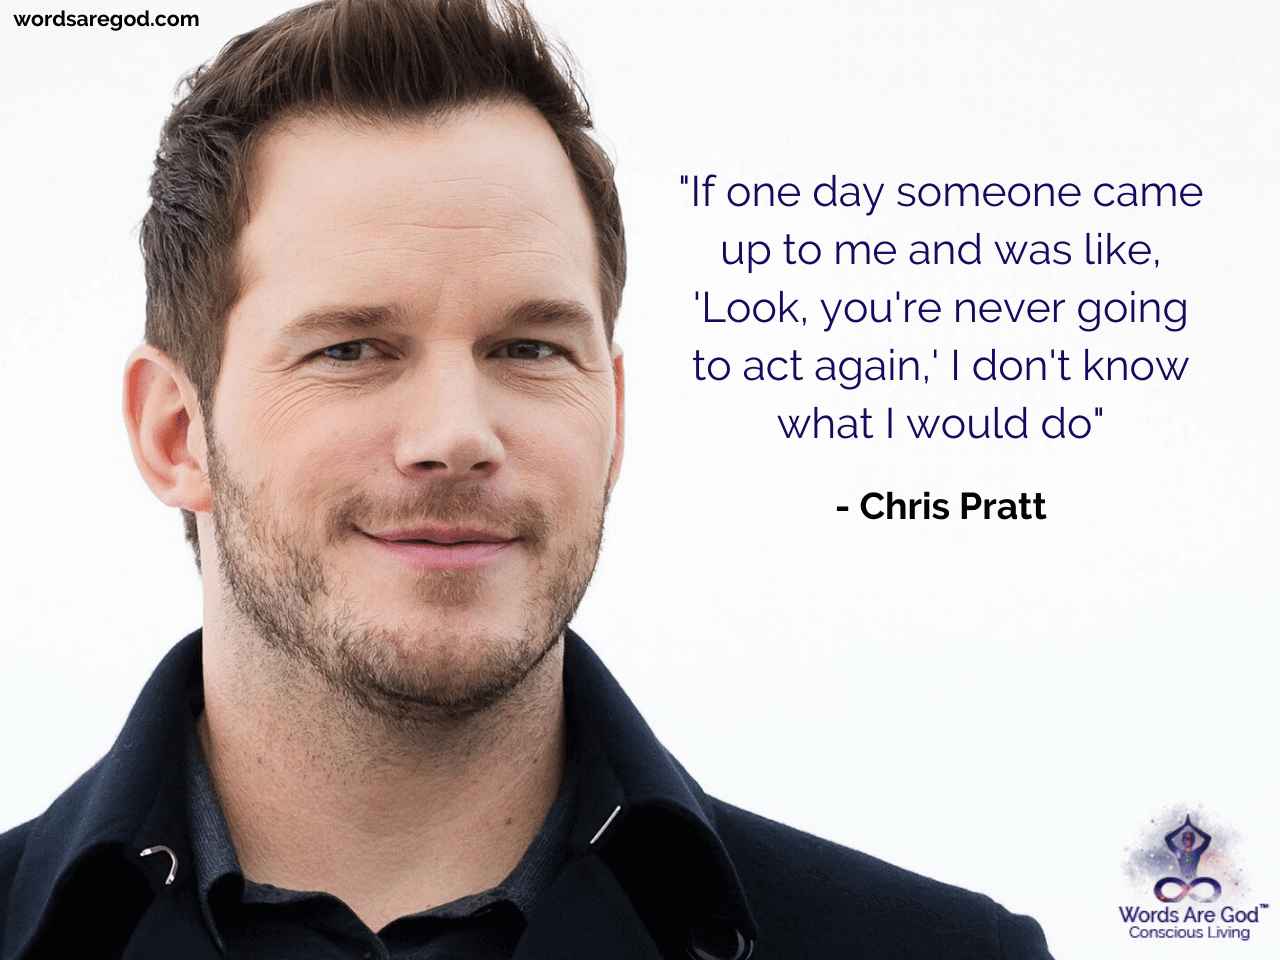 Chris Pratt Best Quote by Chris Pratt